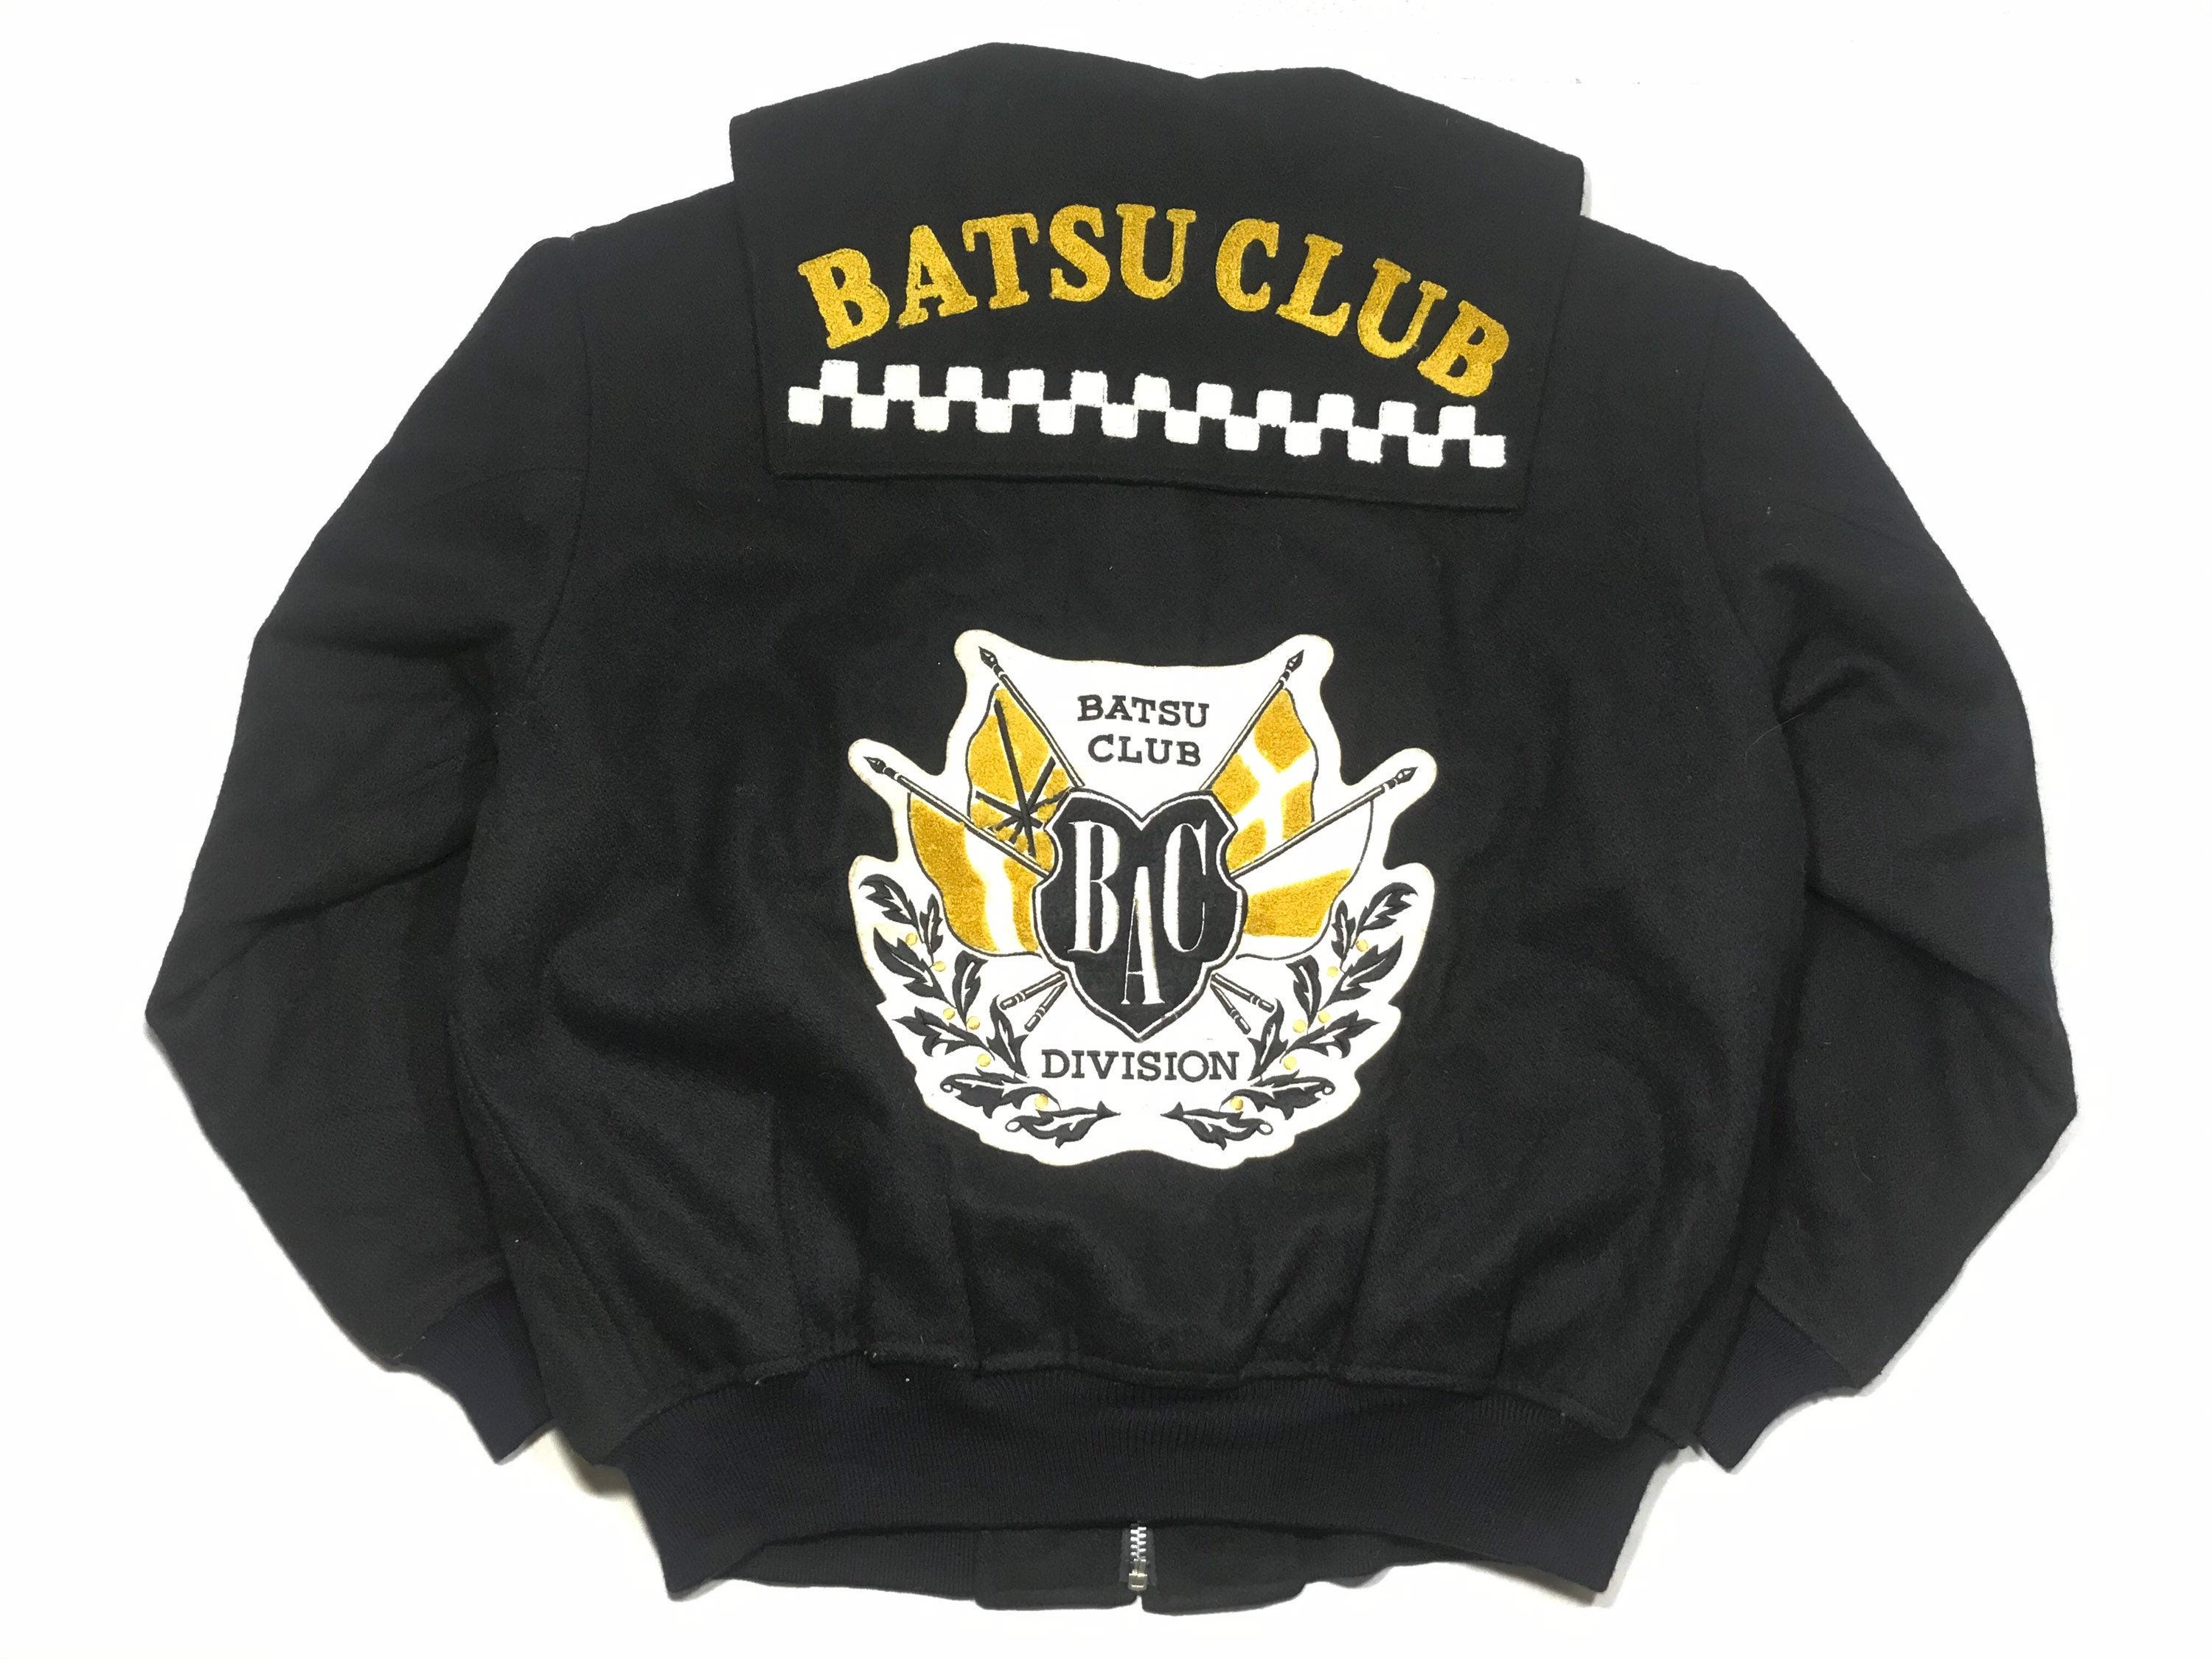 Batsu club